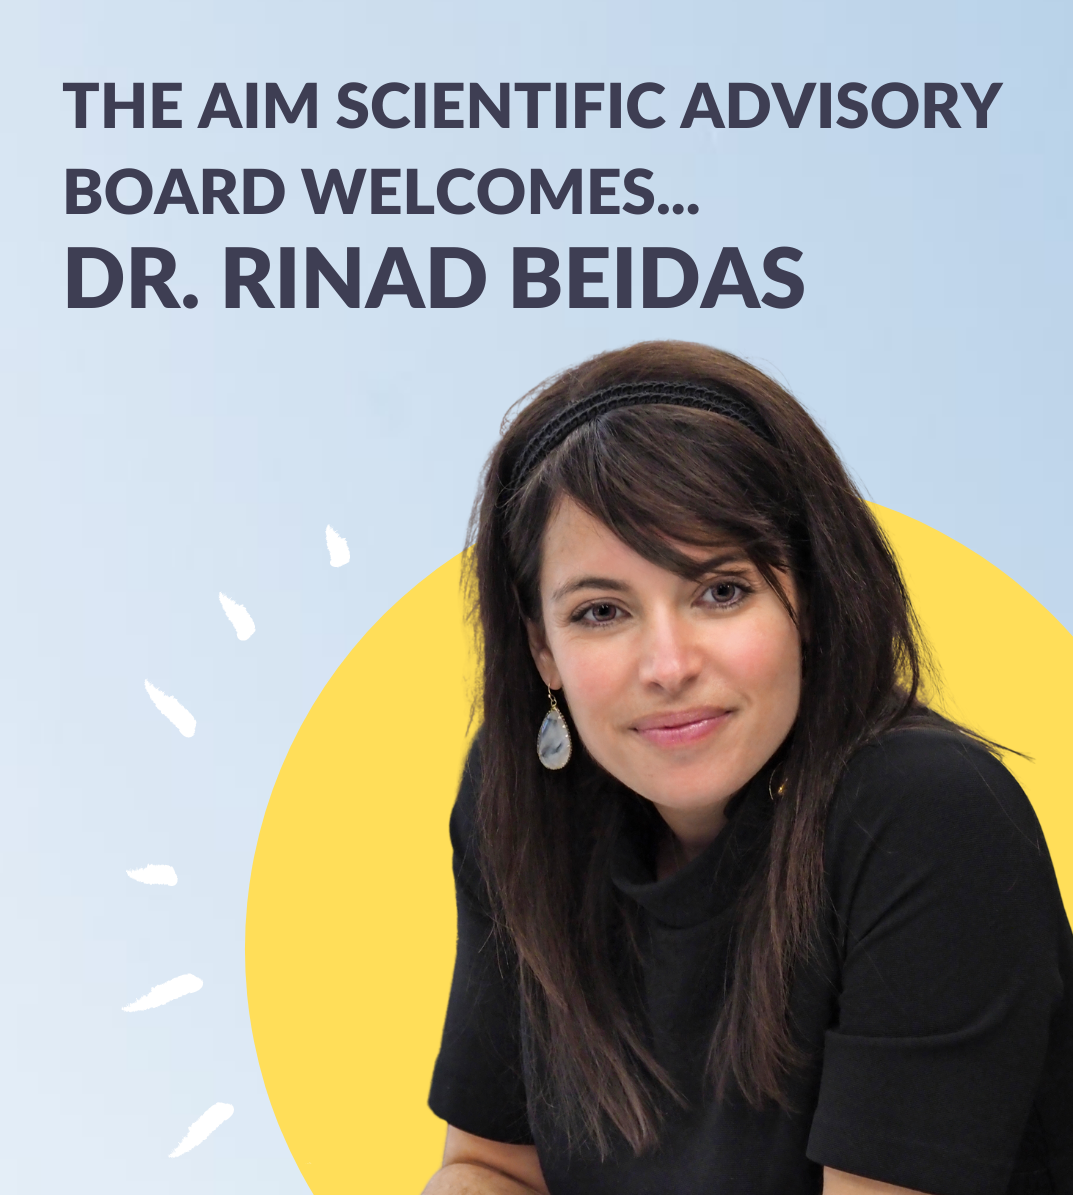 National Implementation Science Leader, Rinad Beidas, Joins AIM Scientific Advisory Board